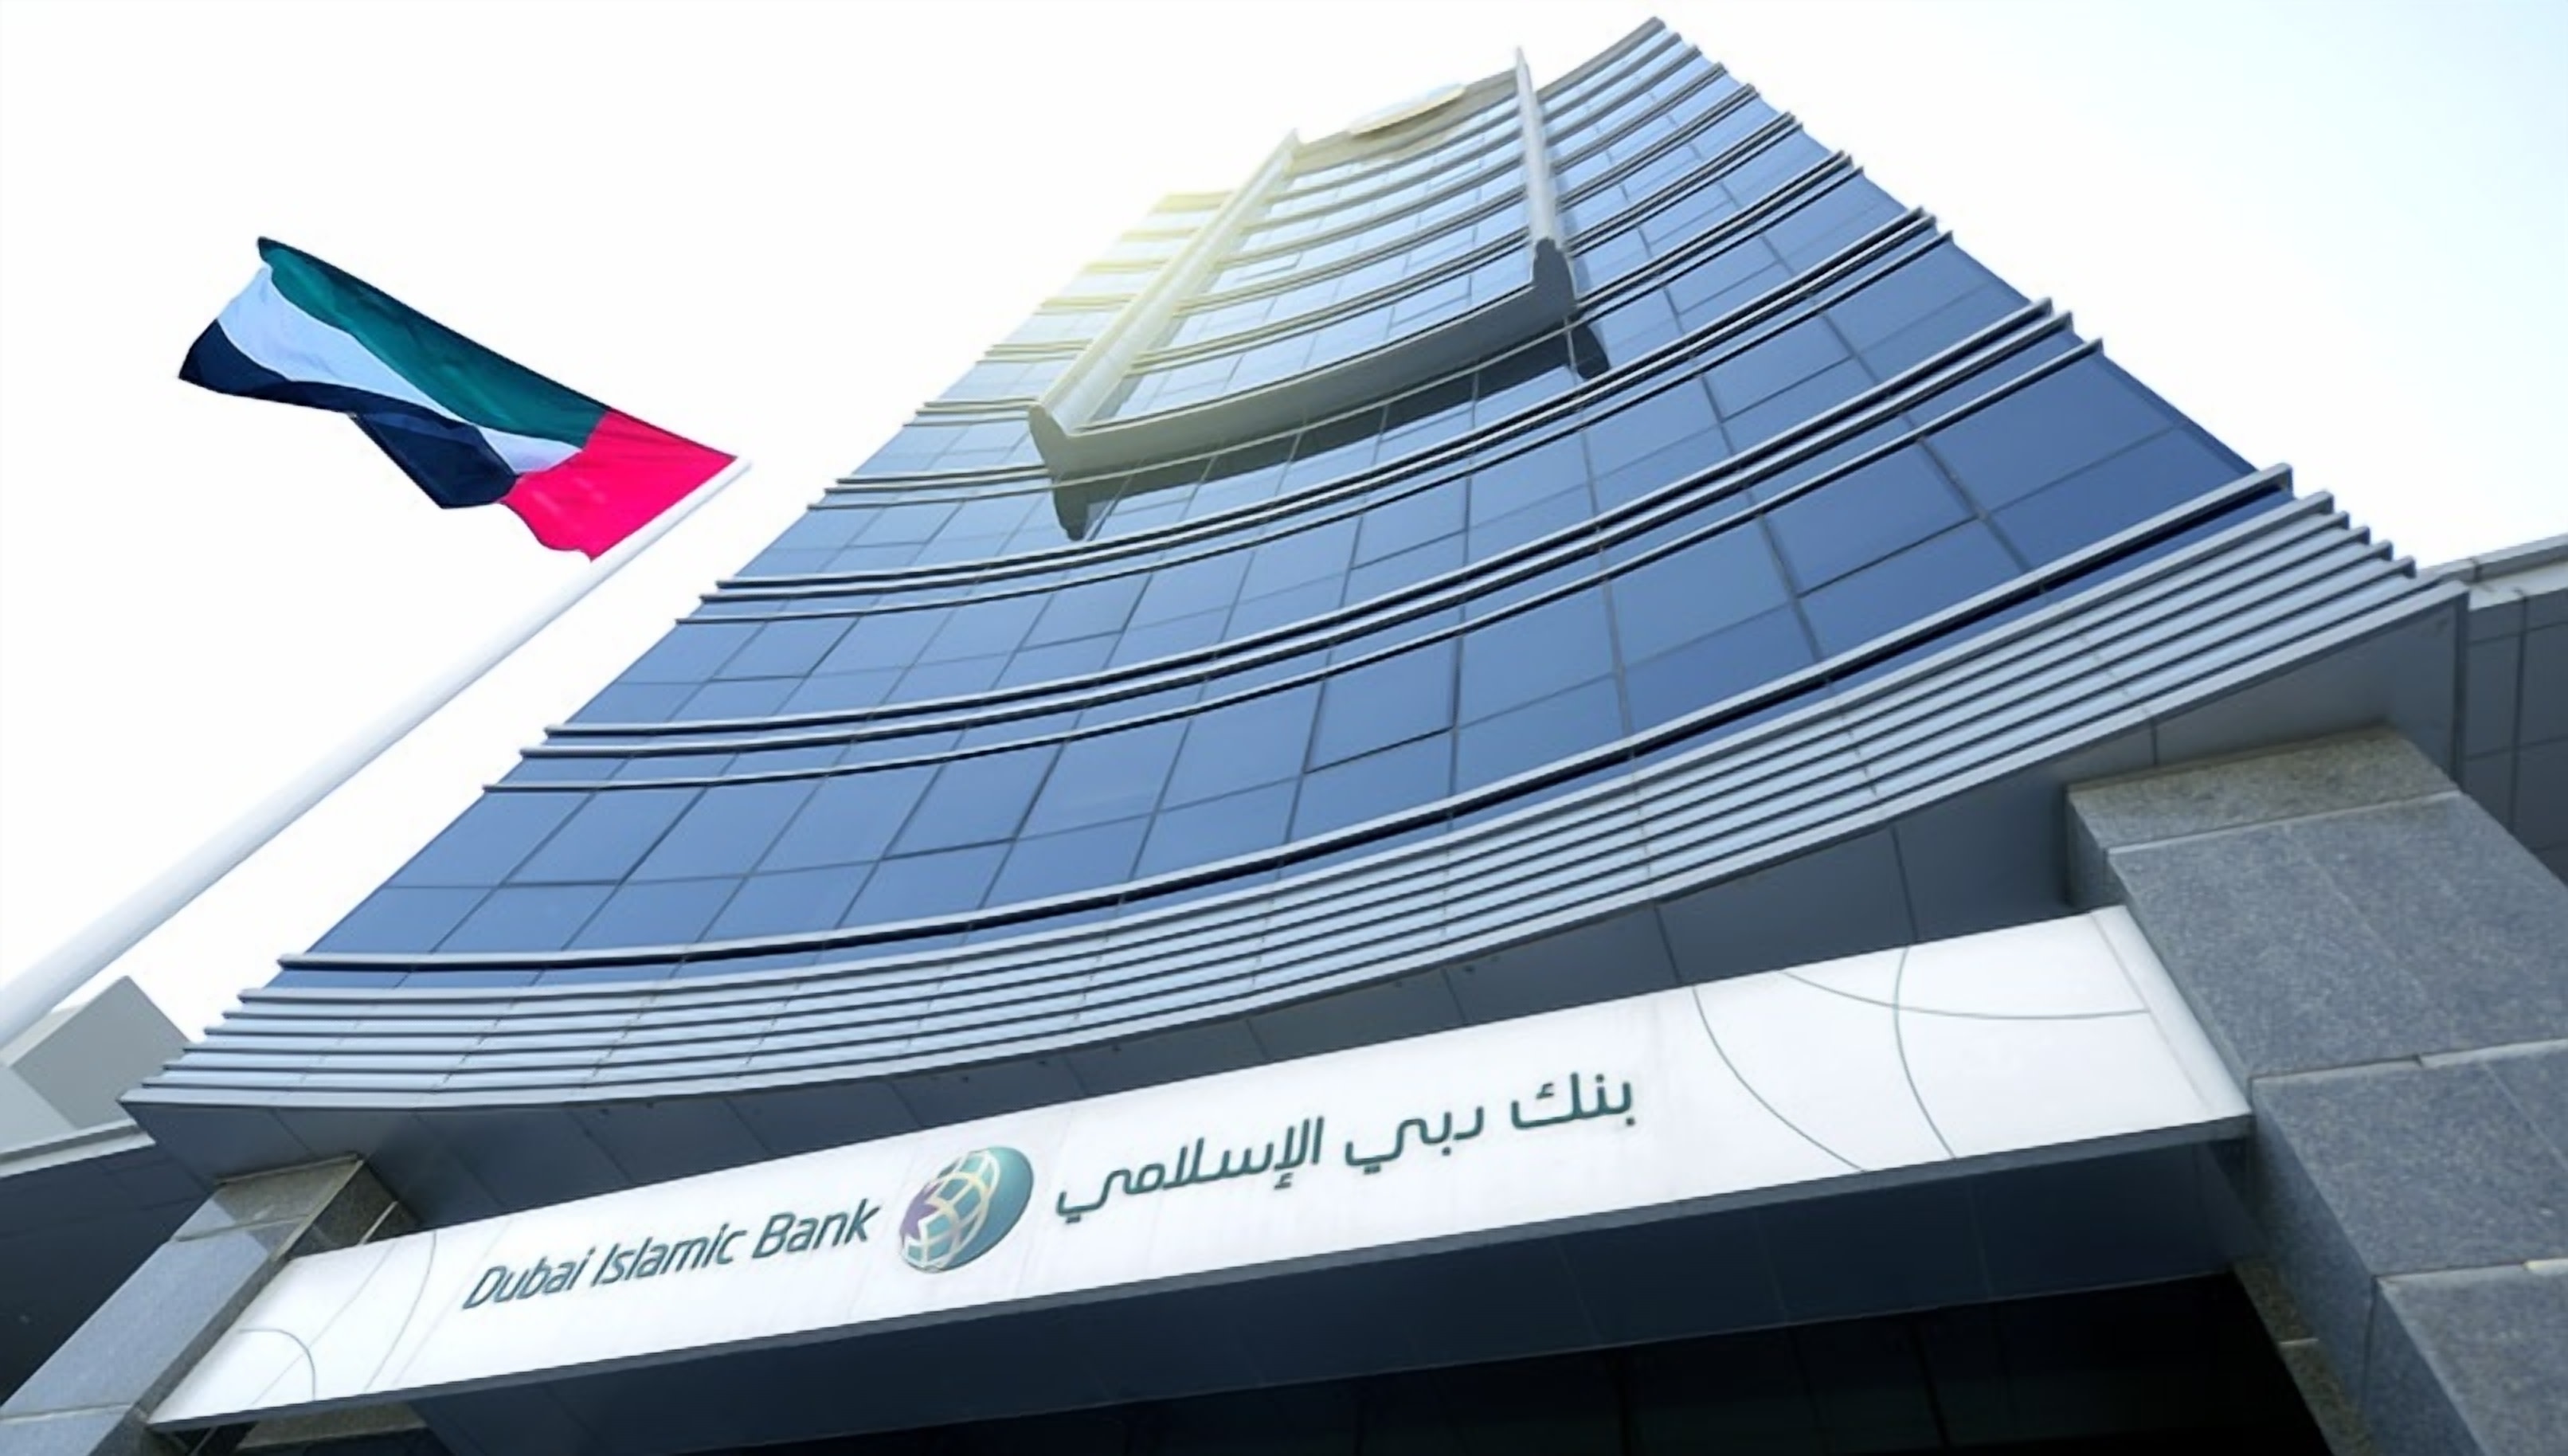 Dubai Islamic Bank Successfully Prices USD 750 Million Inaugural Sustainable Sukuk